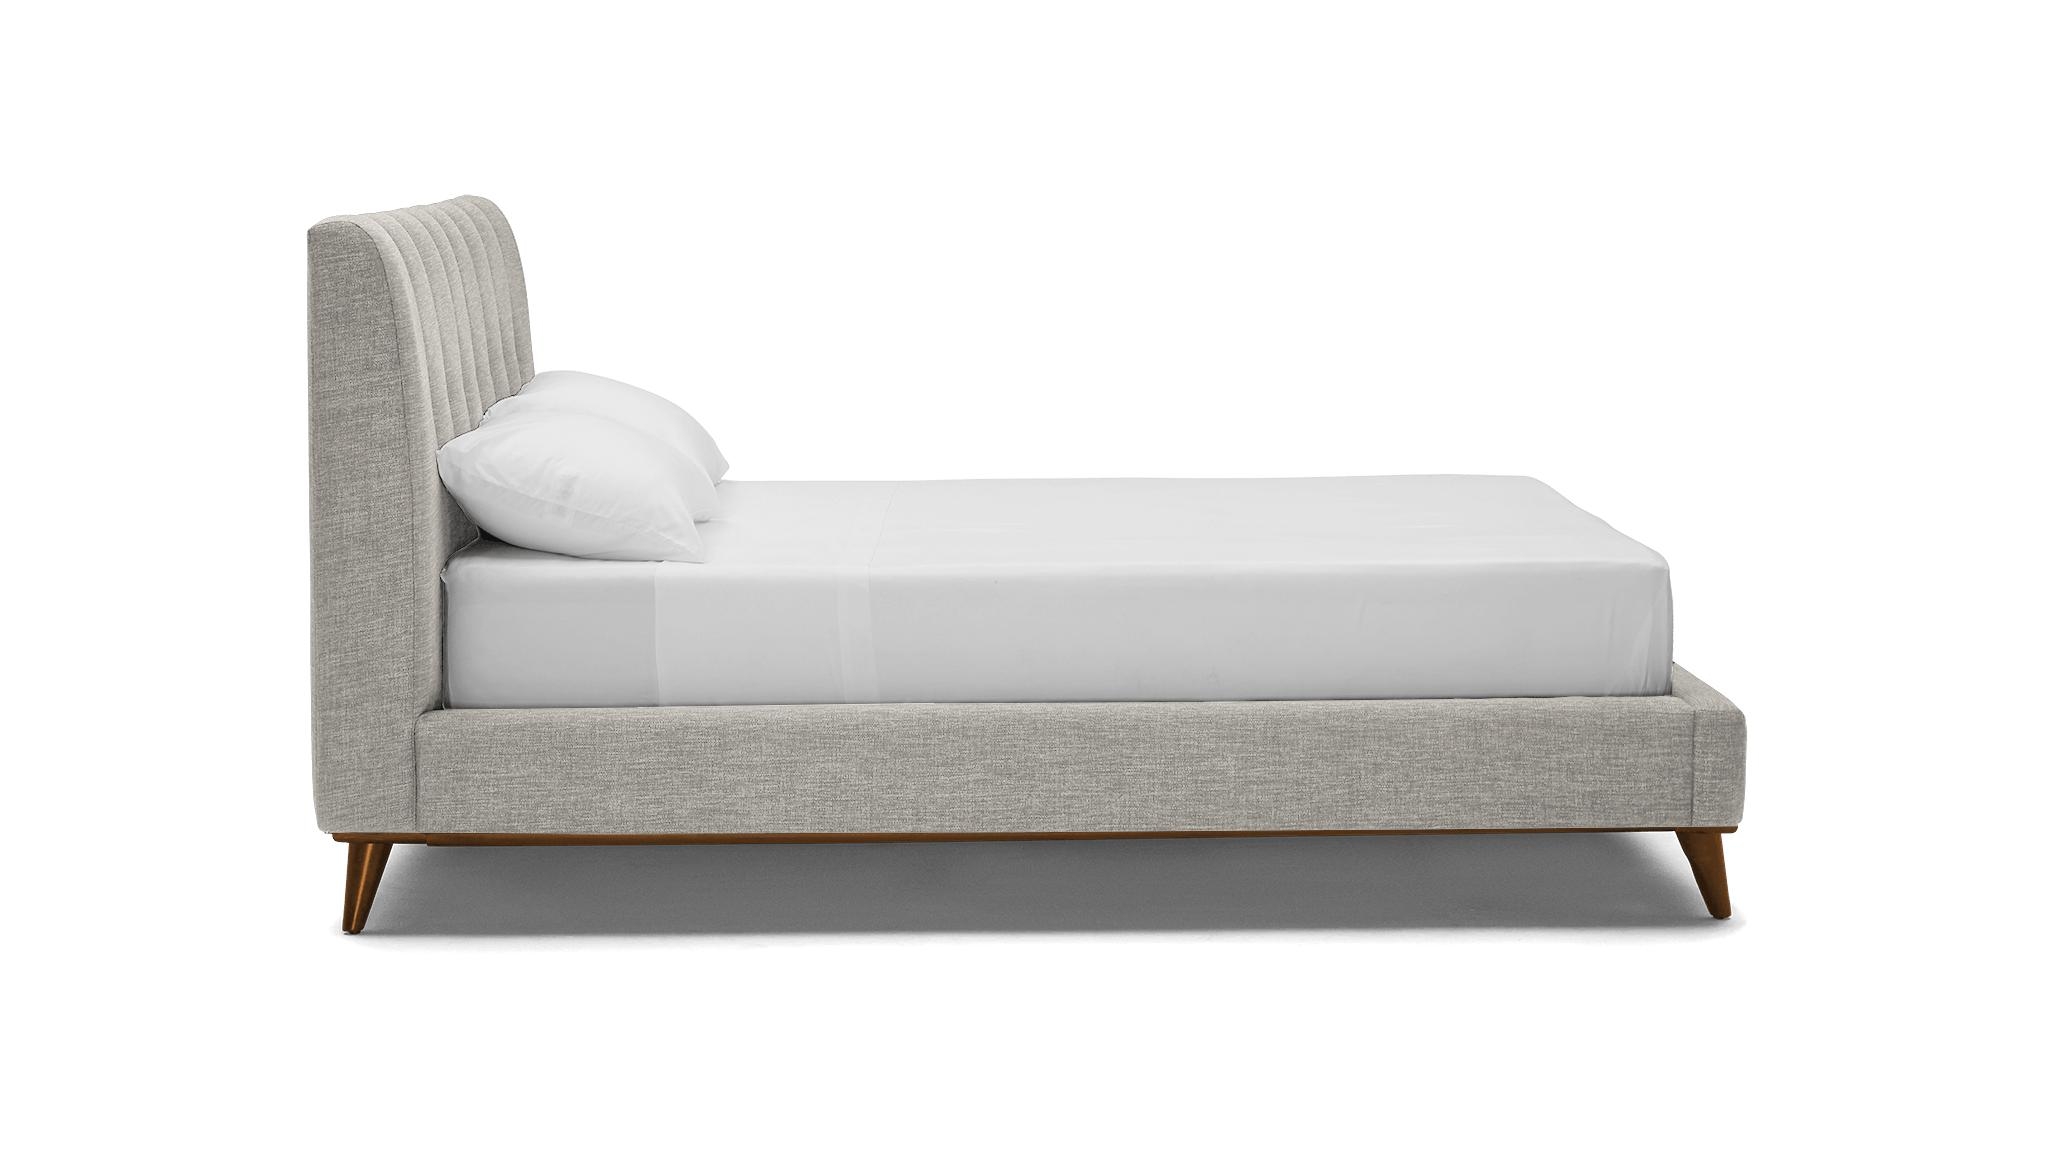 Gray Hughes Mid Century Modern Bed - Bloke Cotton - Mocha - Cal King - Image 2